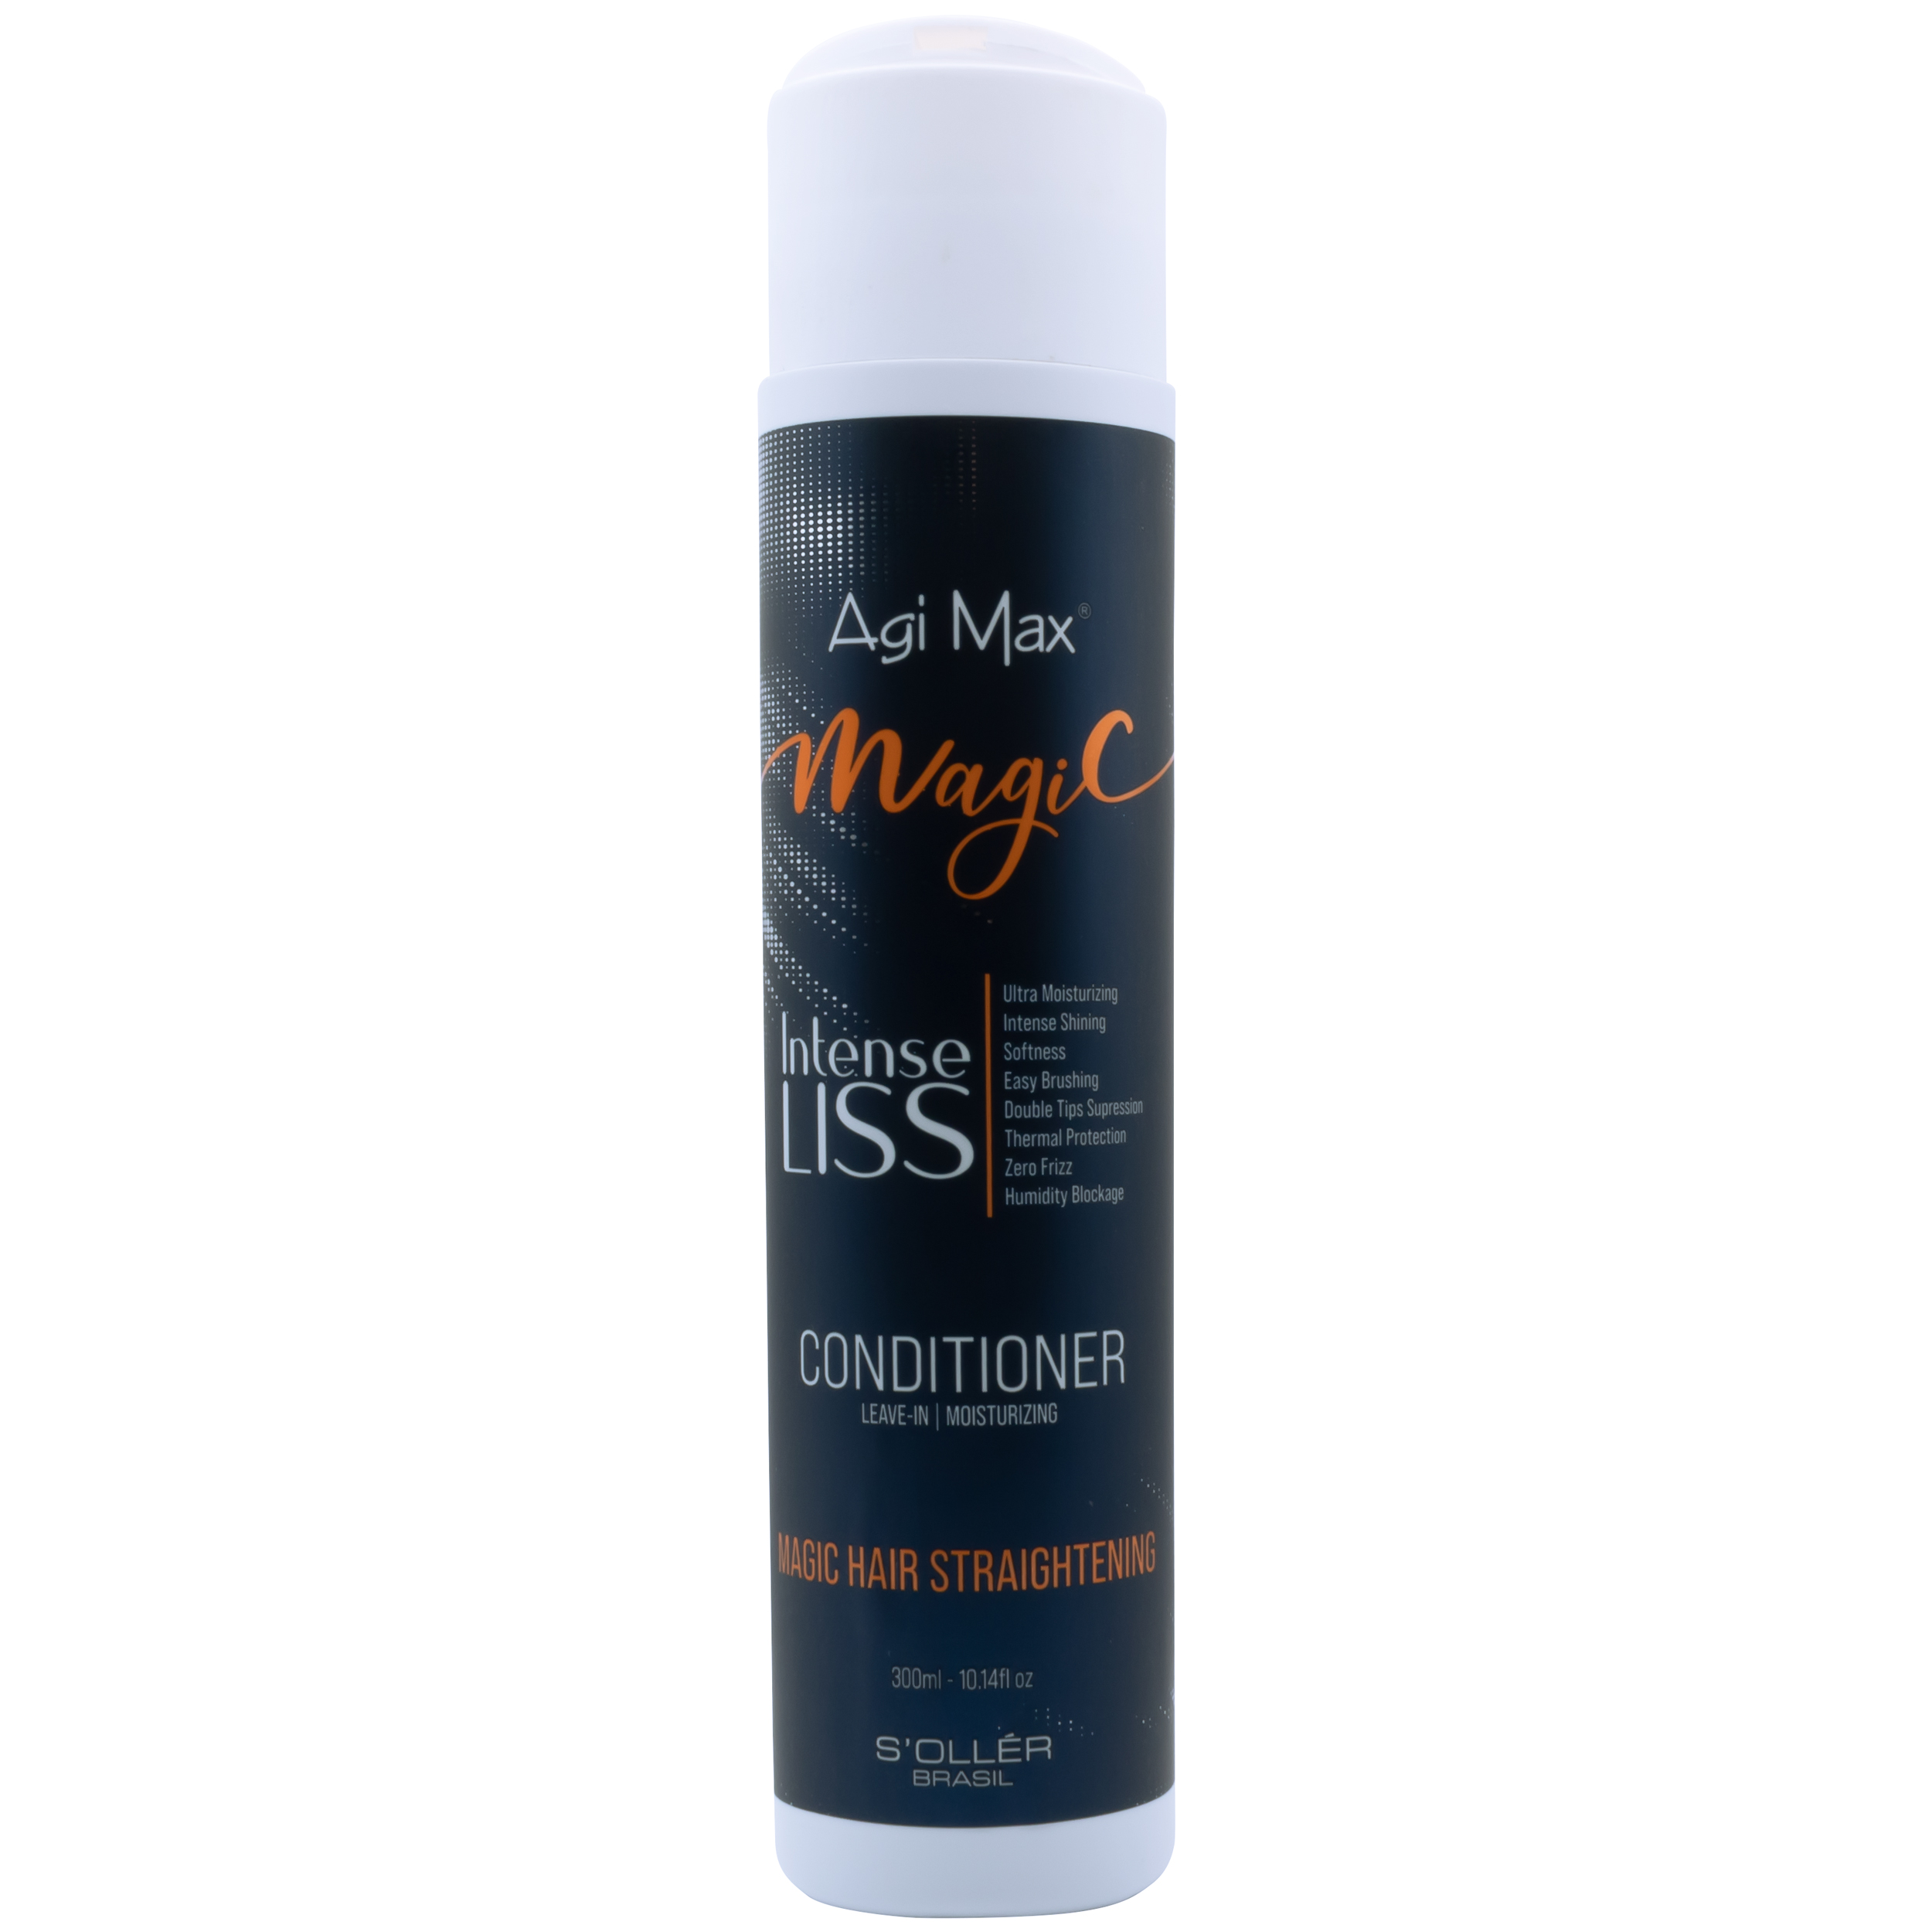 Produto Agi Max Magic Liss Conditioner | Coleção Magic Liss